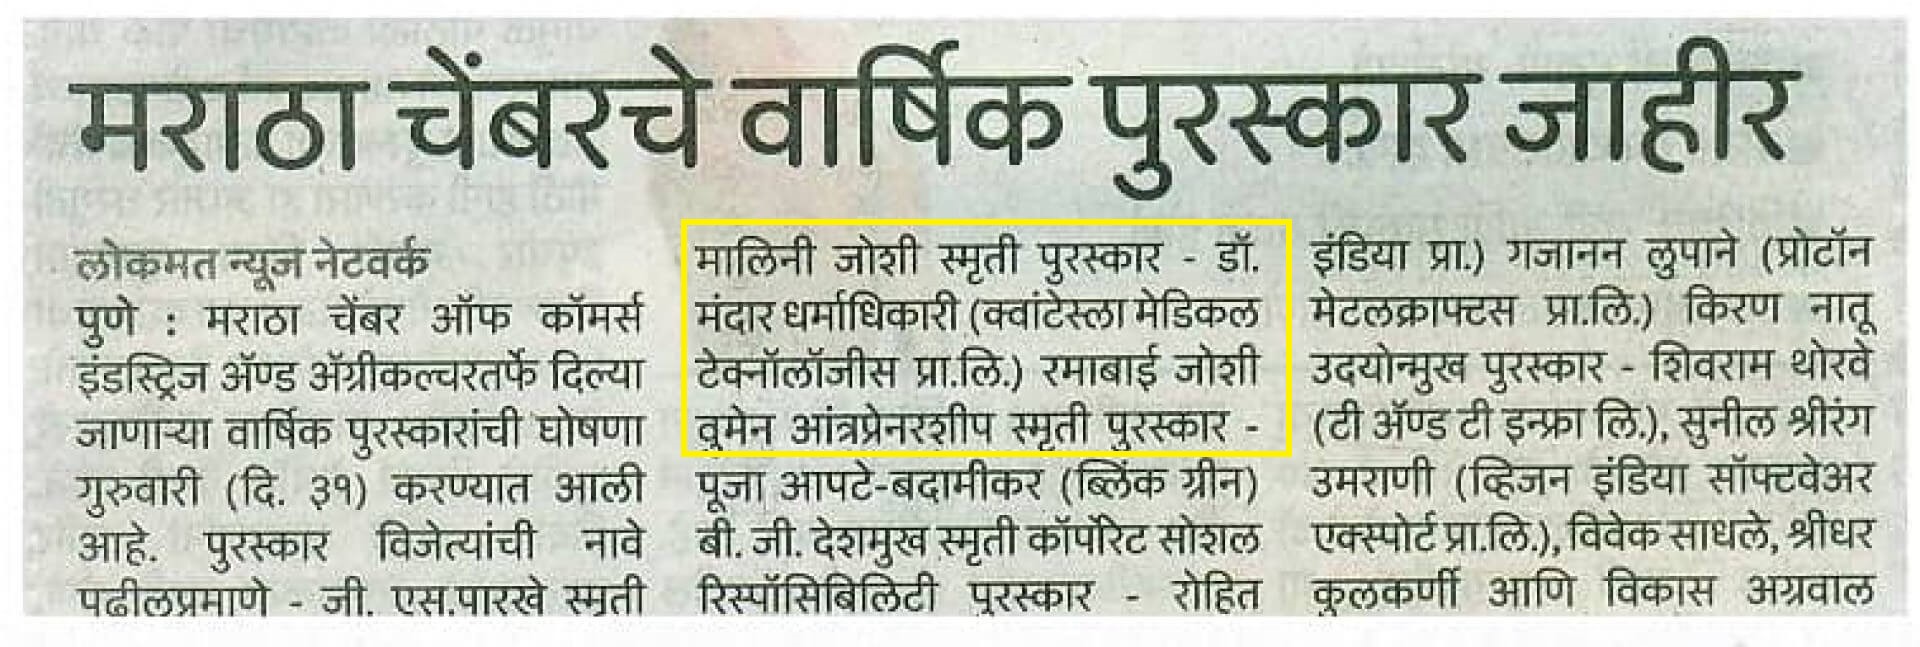 Lokmat marathi newspaper mentioning award to Quantesla and Dr Mandar Dharmadhikari by MCCIA, Pune